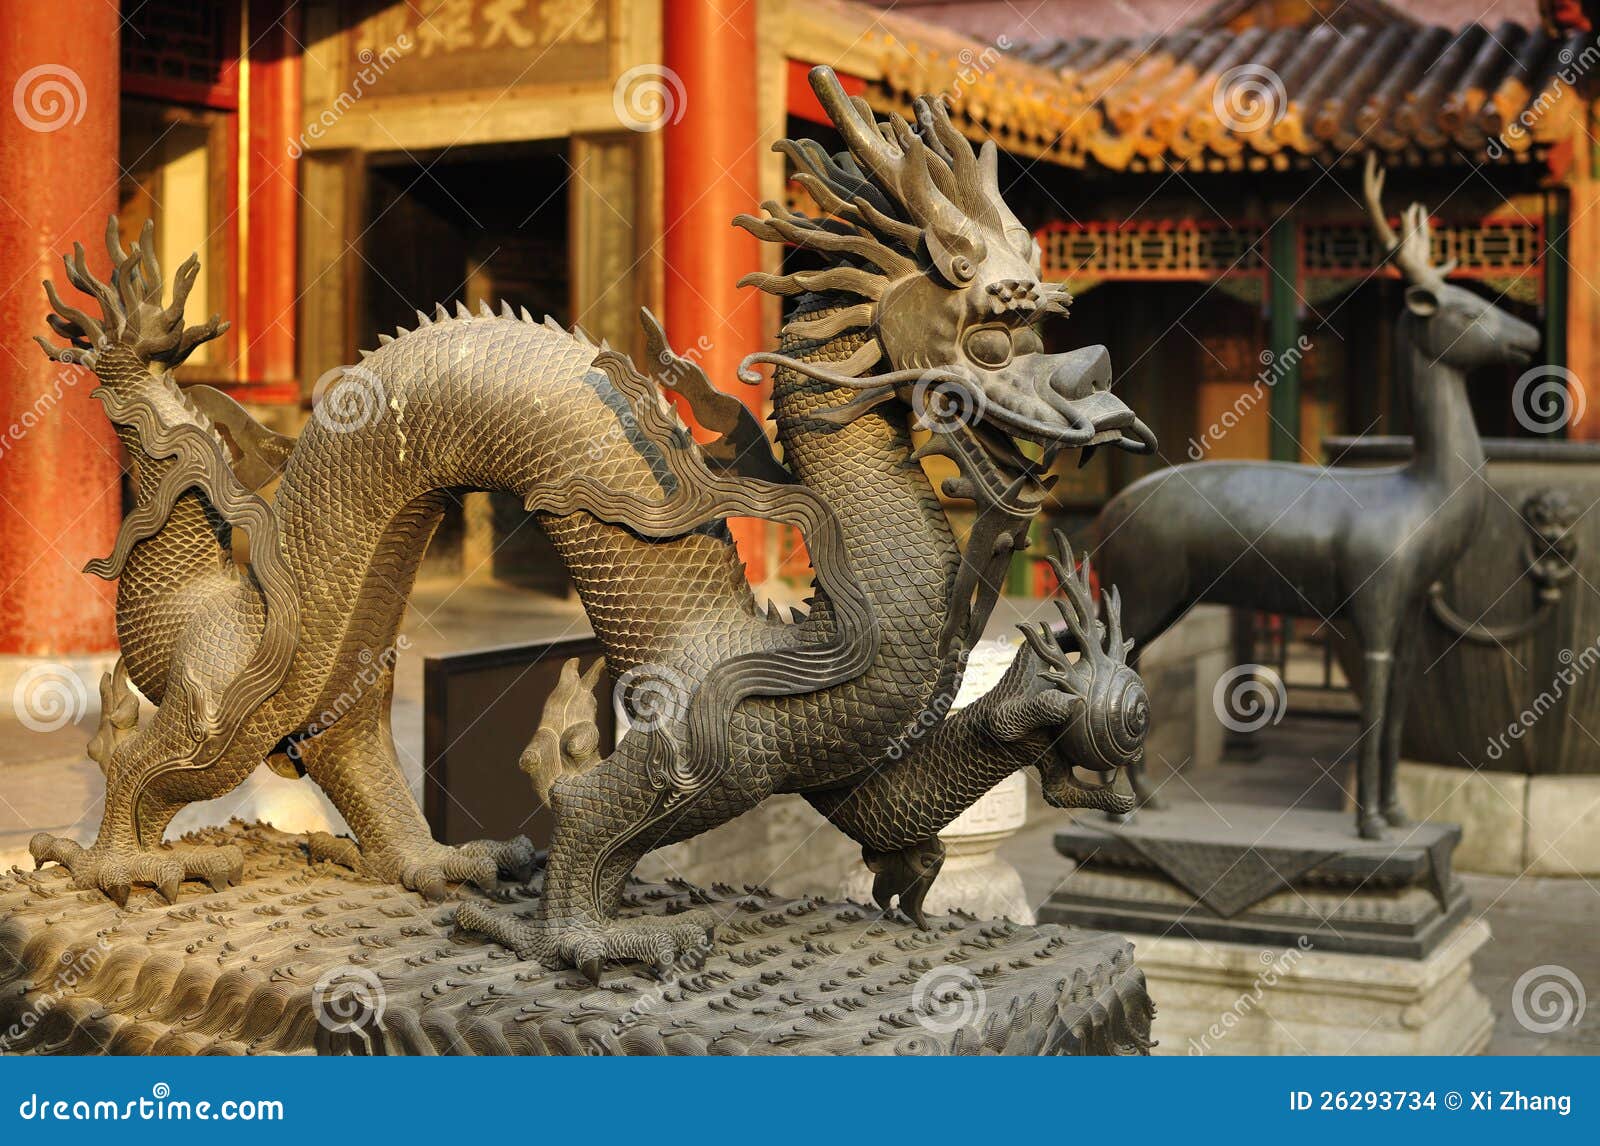 beijing forbidden city palace dragon